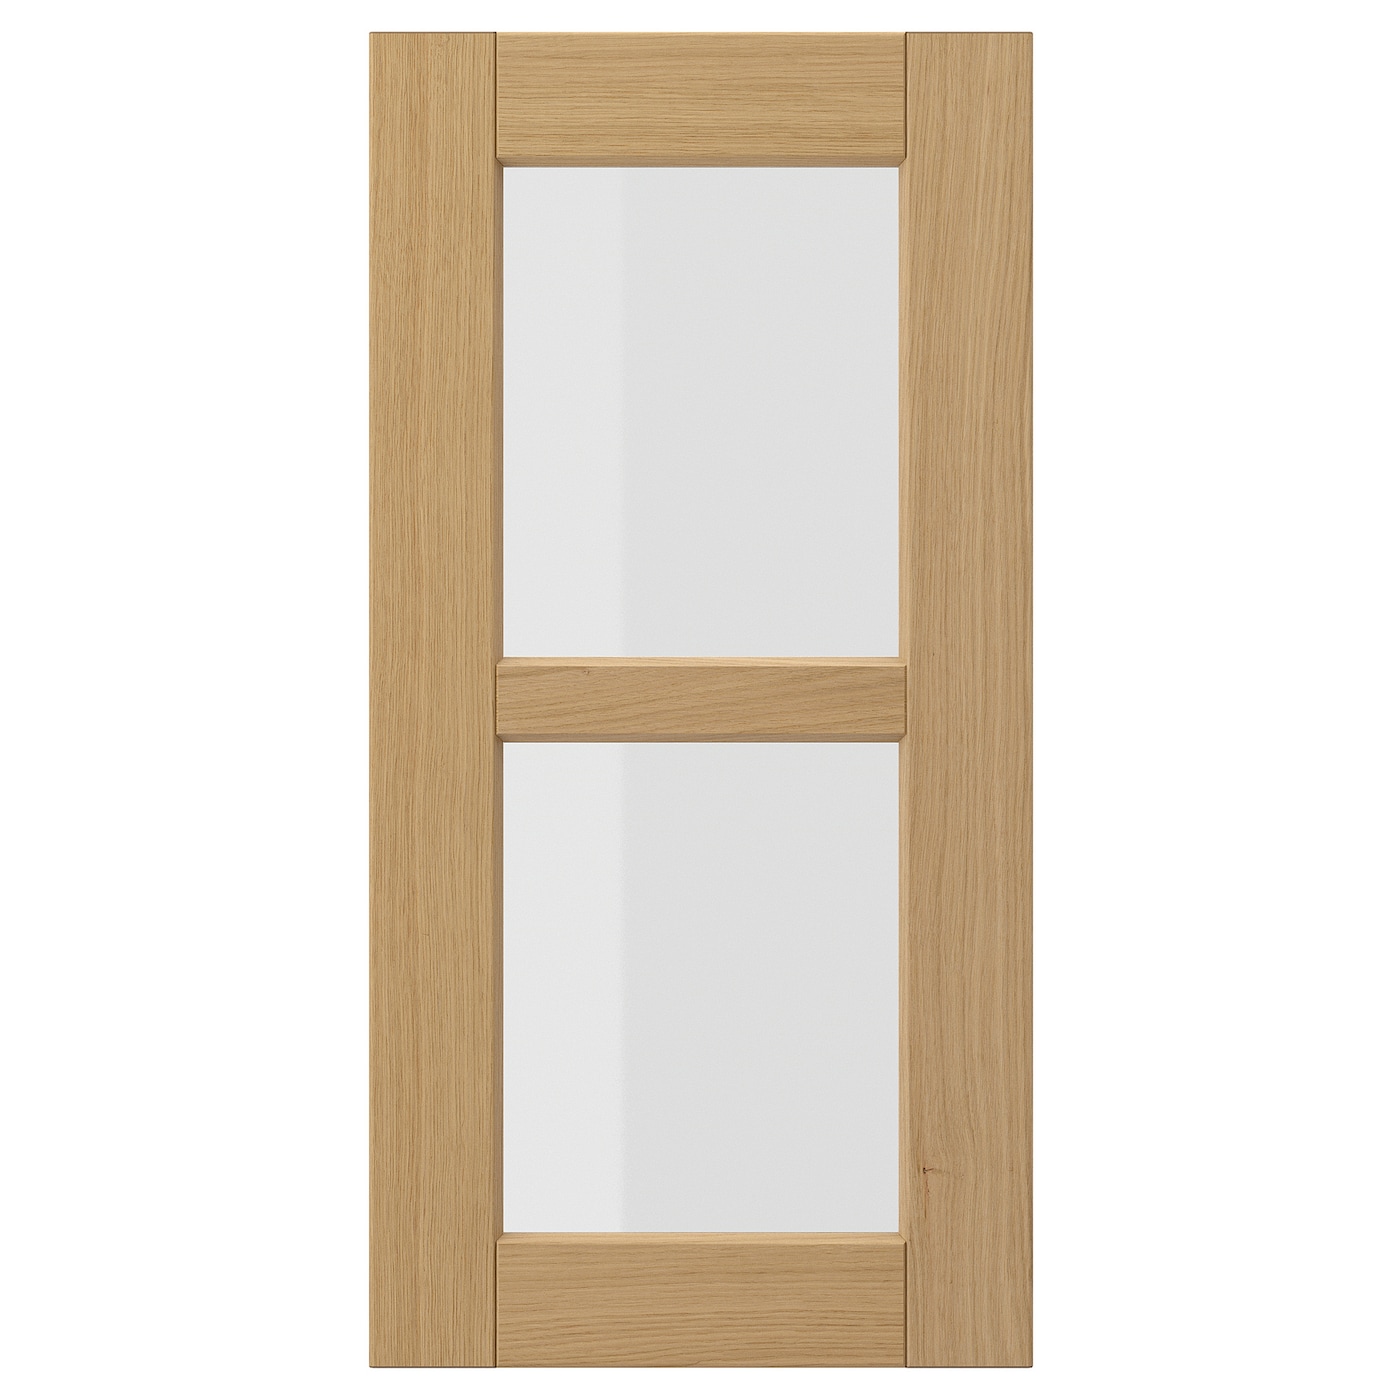 Стеклянная дверца - FORSBACKA IKEA/ ФОРСБАКА ИКЕА,  30х60 см, под беленый дуб